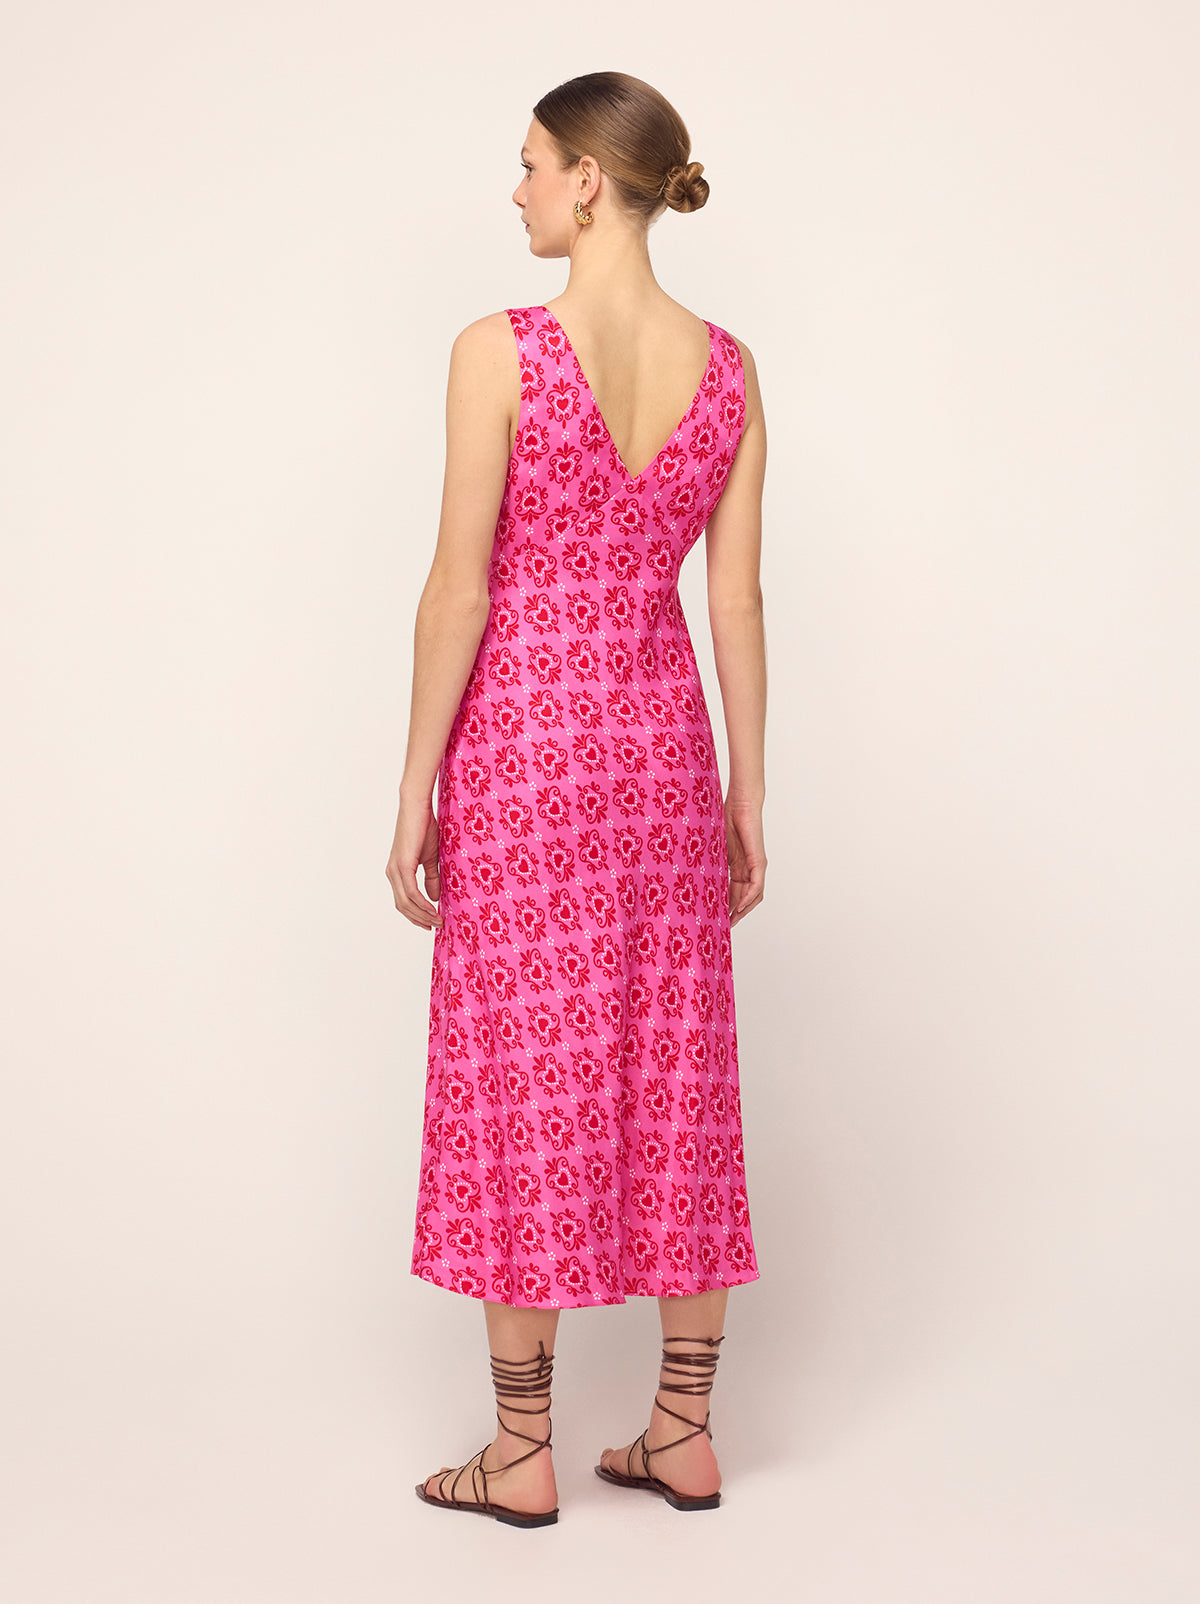 Claire Pink Heart Print Slip Dress By KITRI Studio